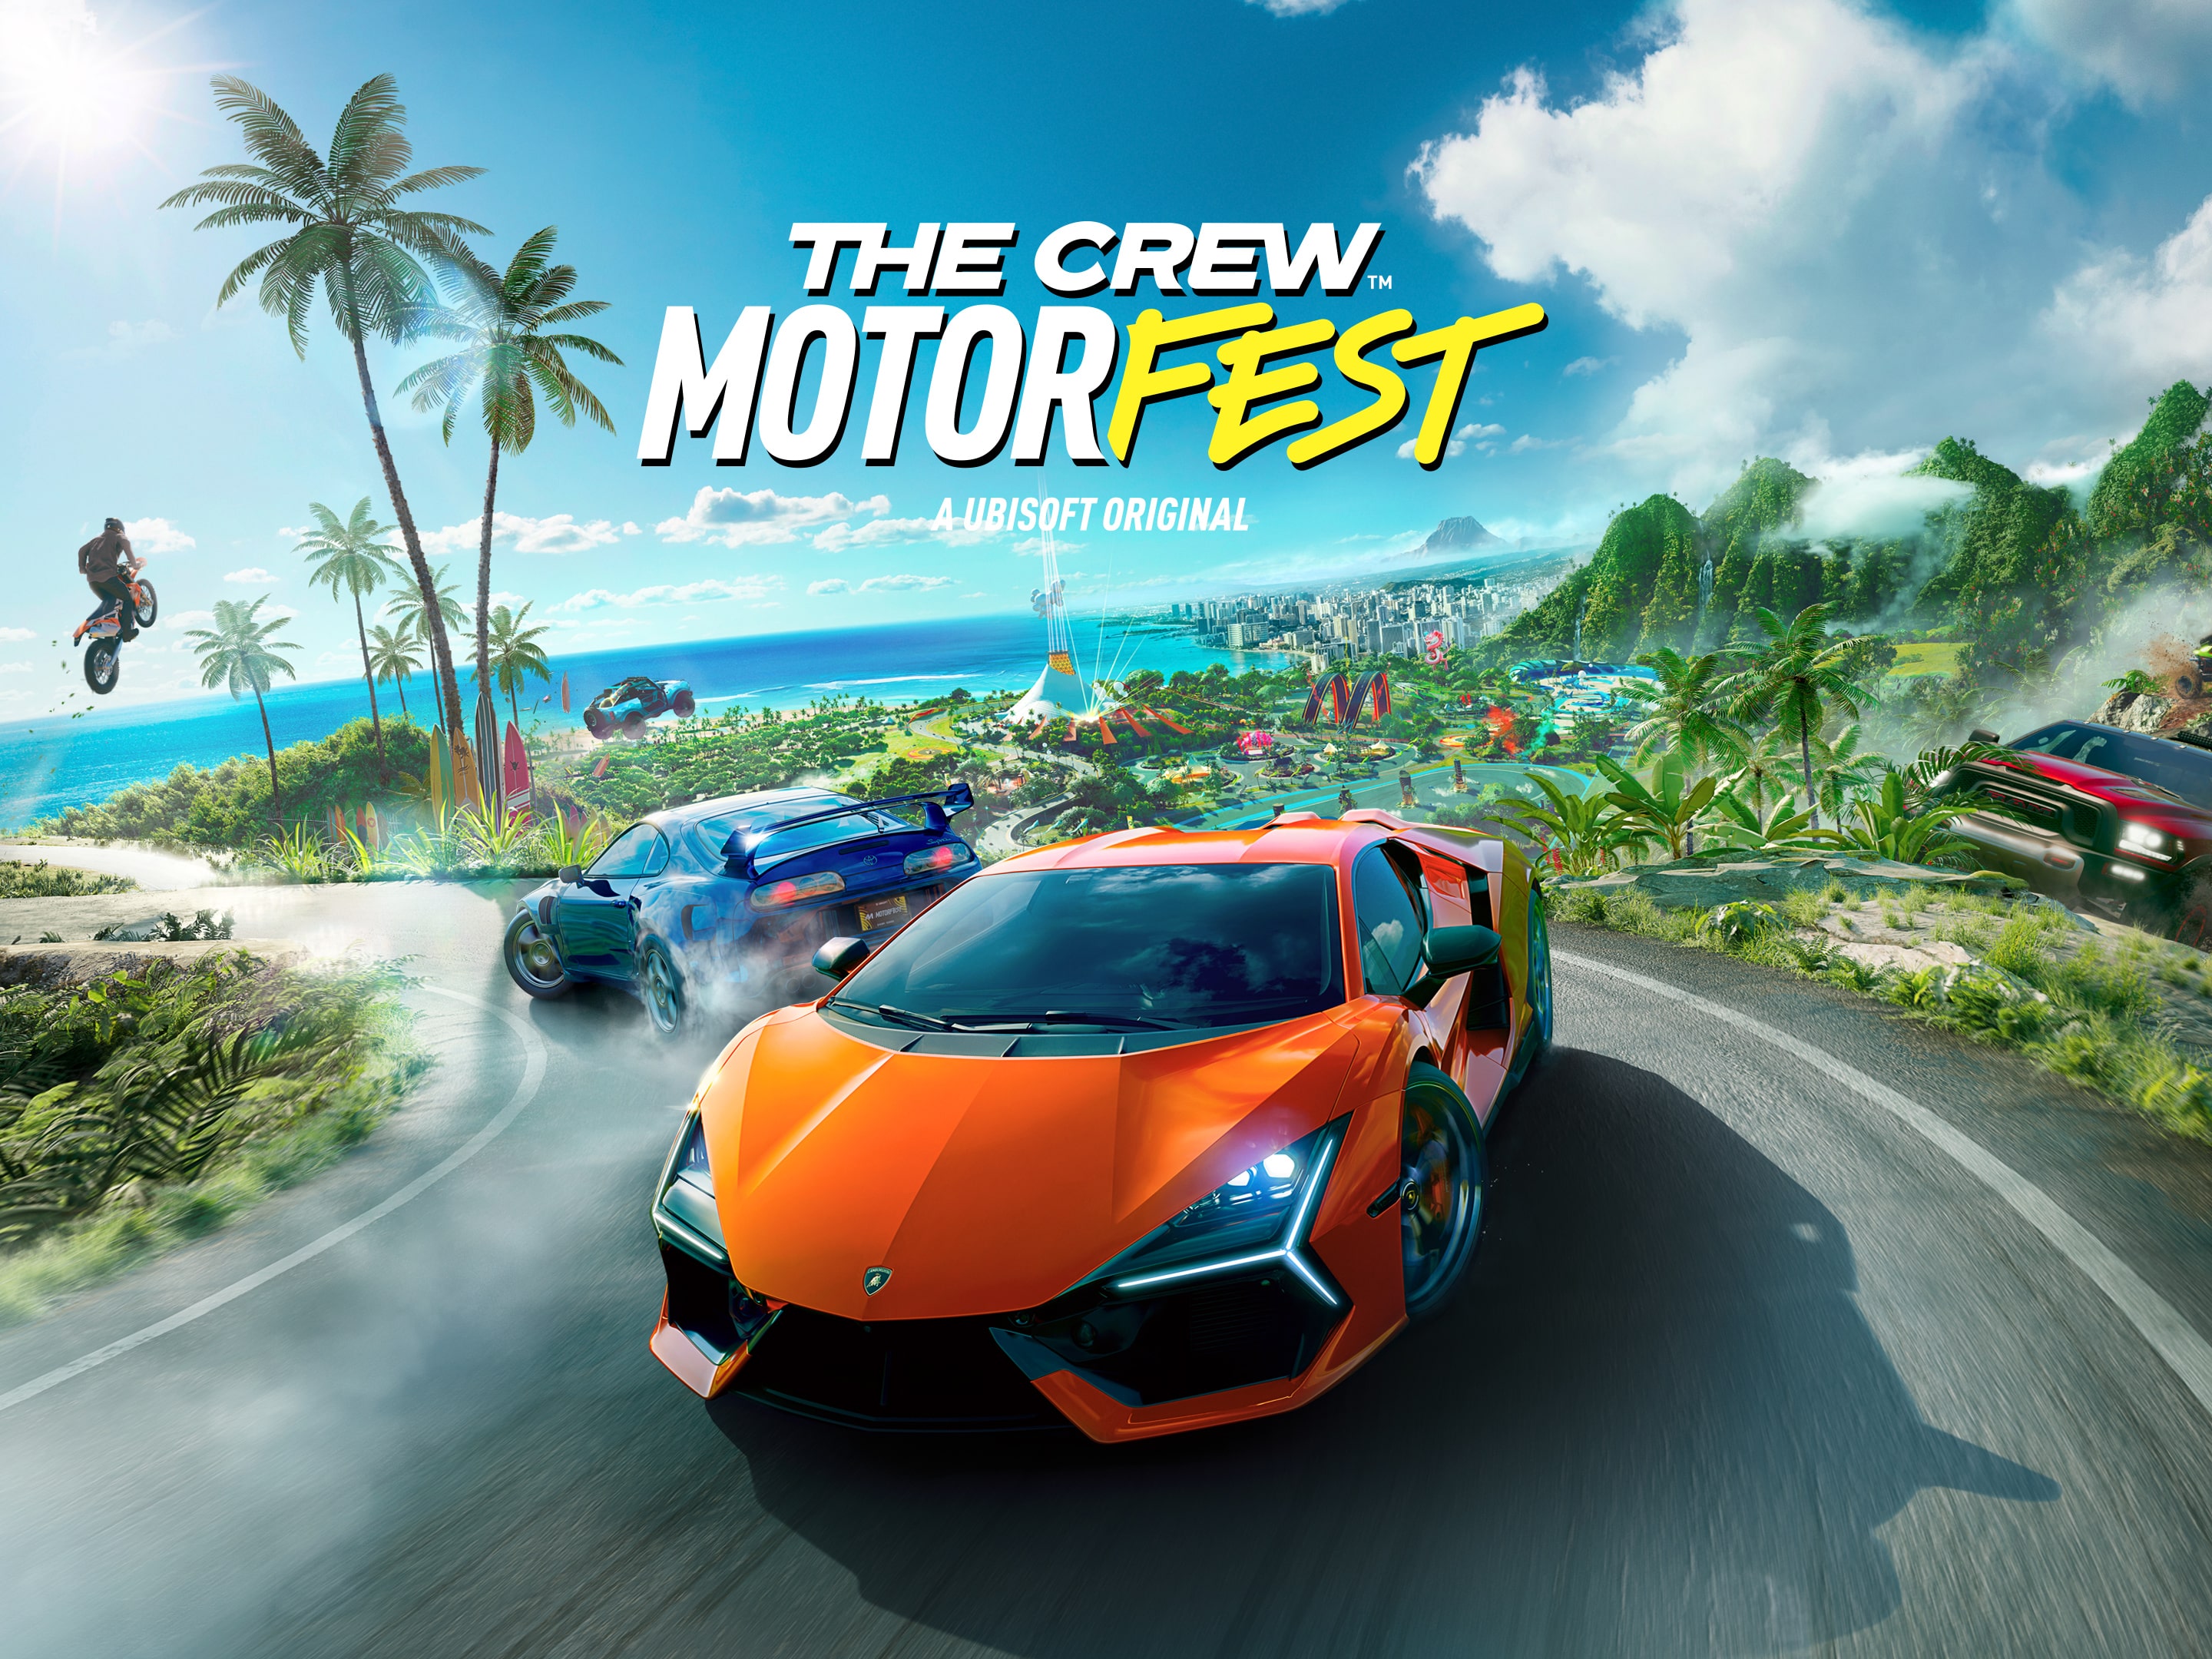 The Crew™ Motorfest Standard Edition